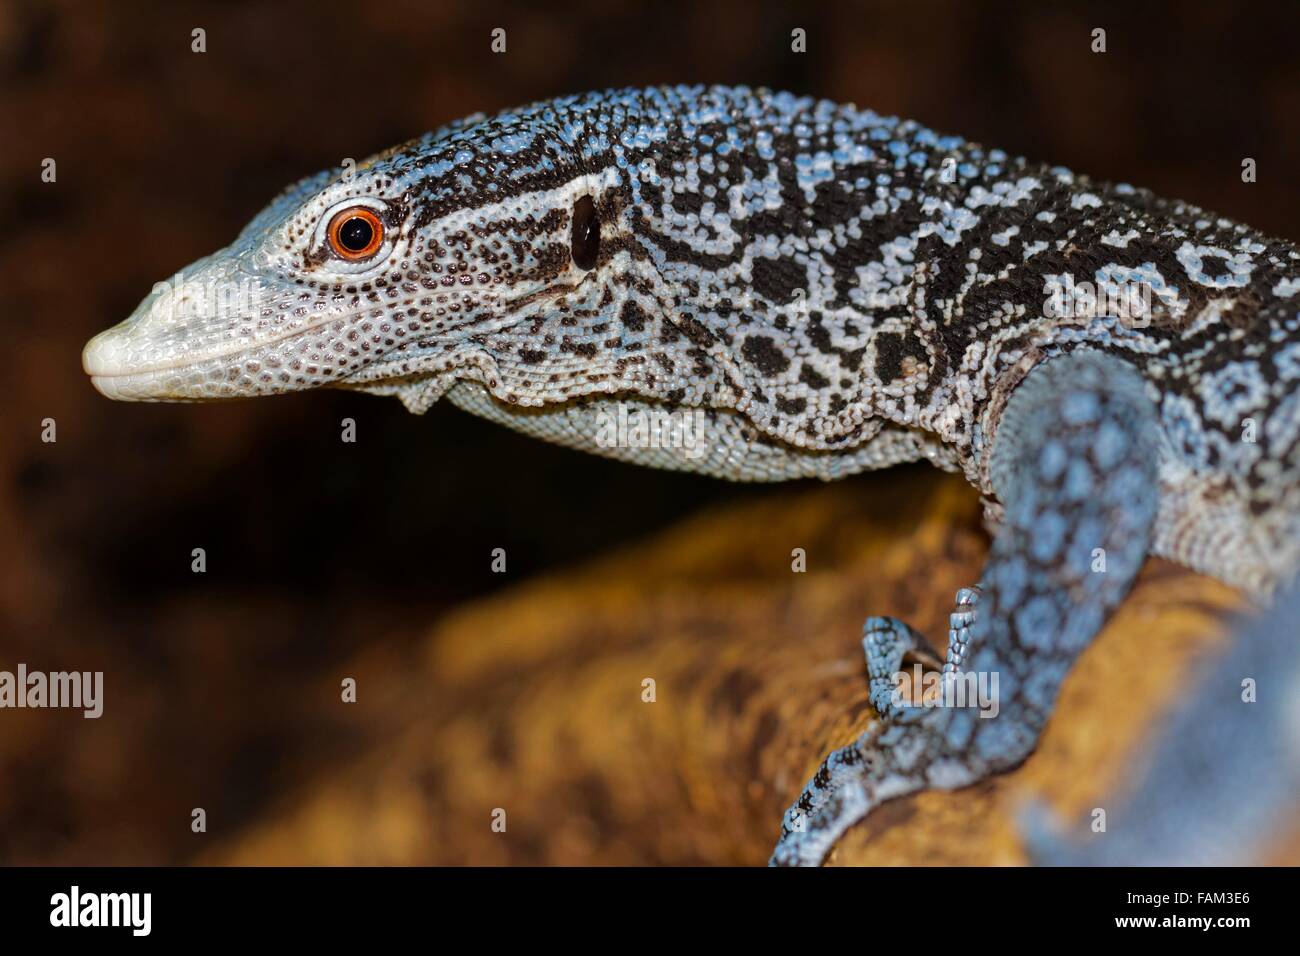 Male blue tree monitor lizard (Varanus macraei) Stock Photo